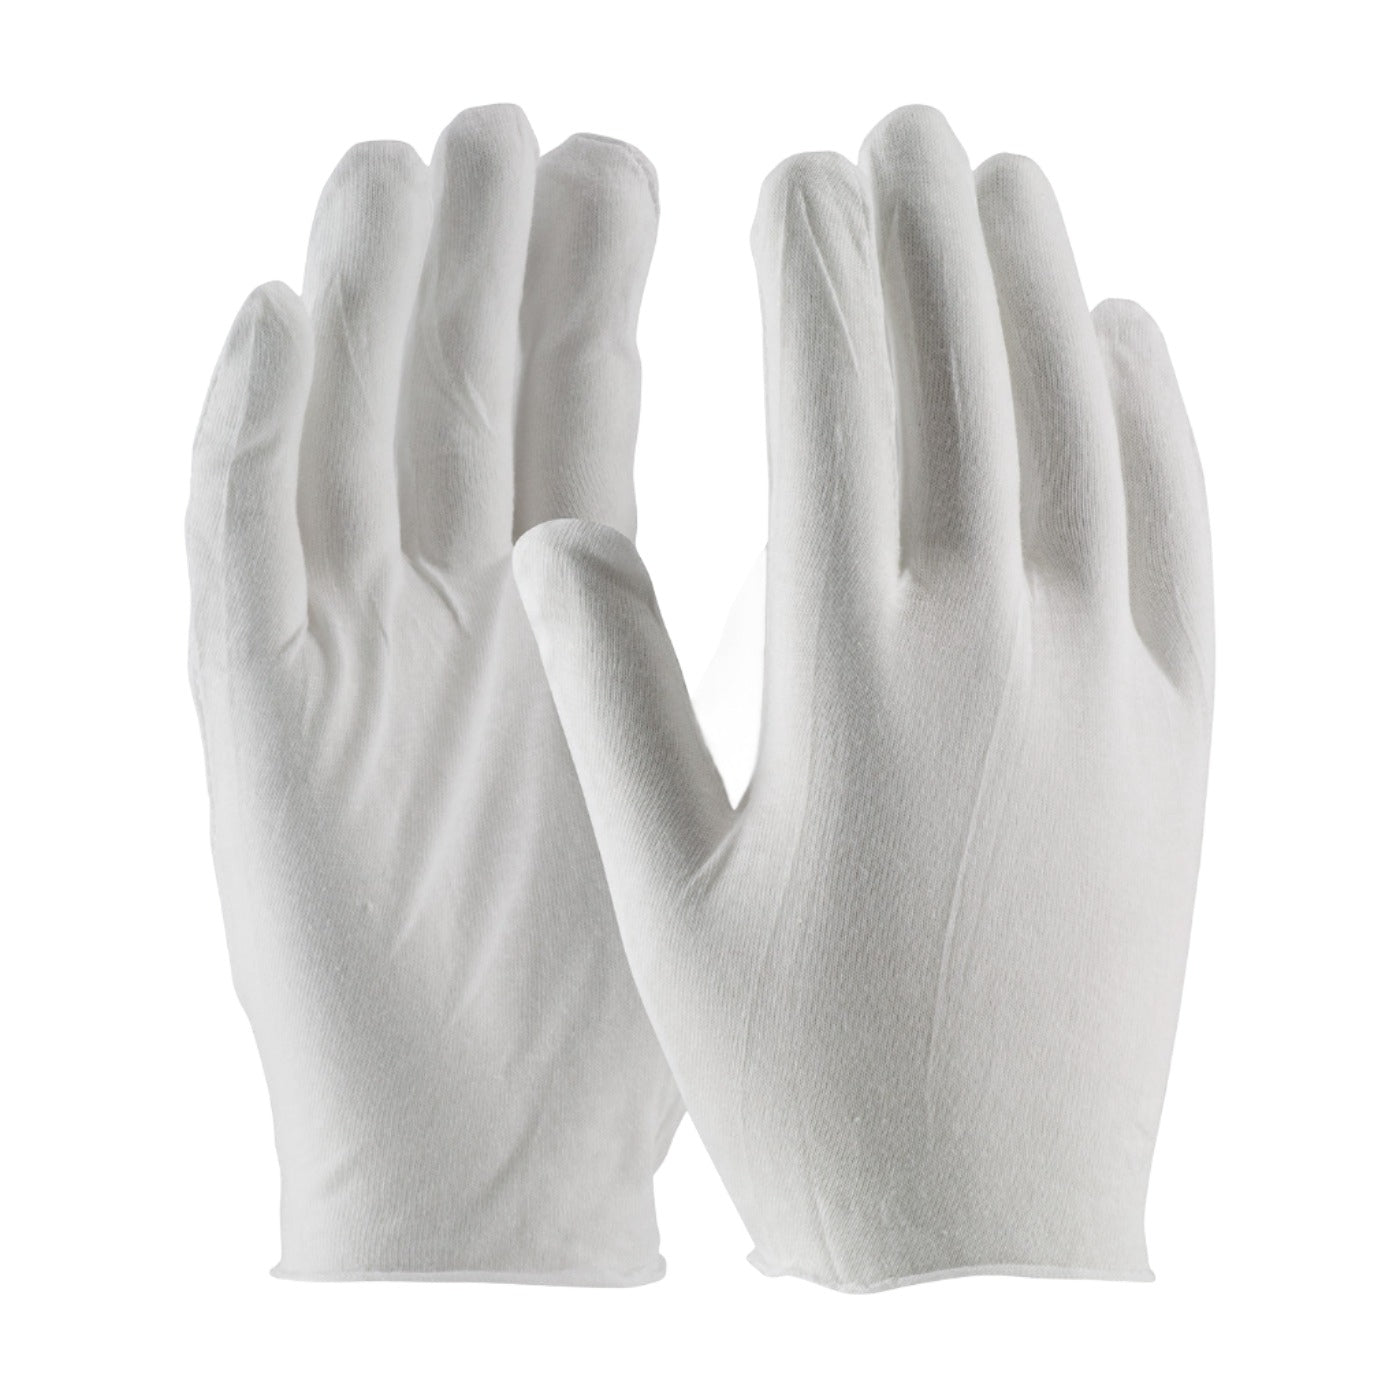 PIP CleanTeam 97-500 Premium Cotton Lisle Inspection Gloves, Men’s, White, 1 Pair